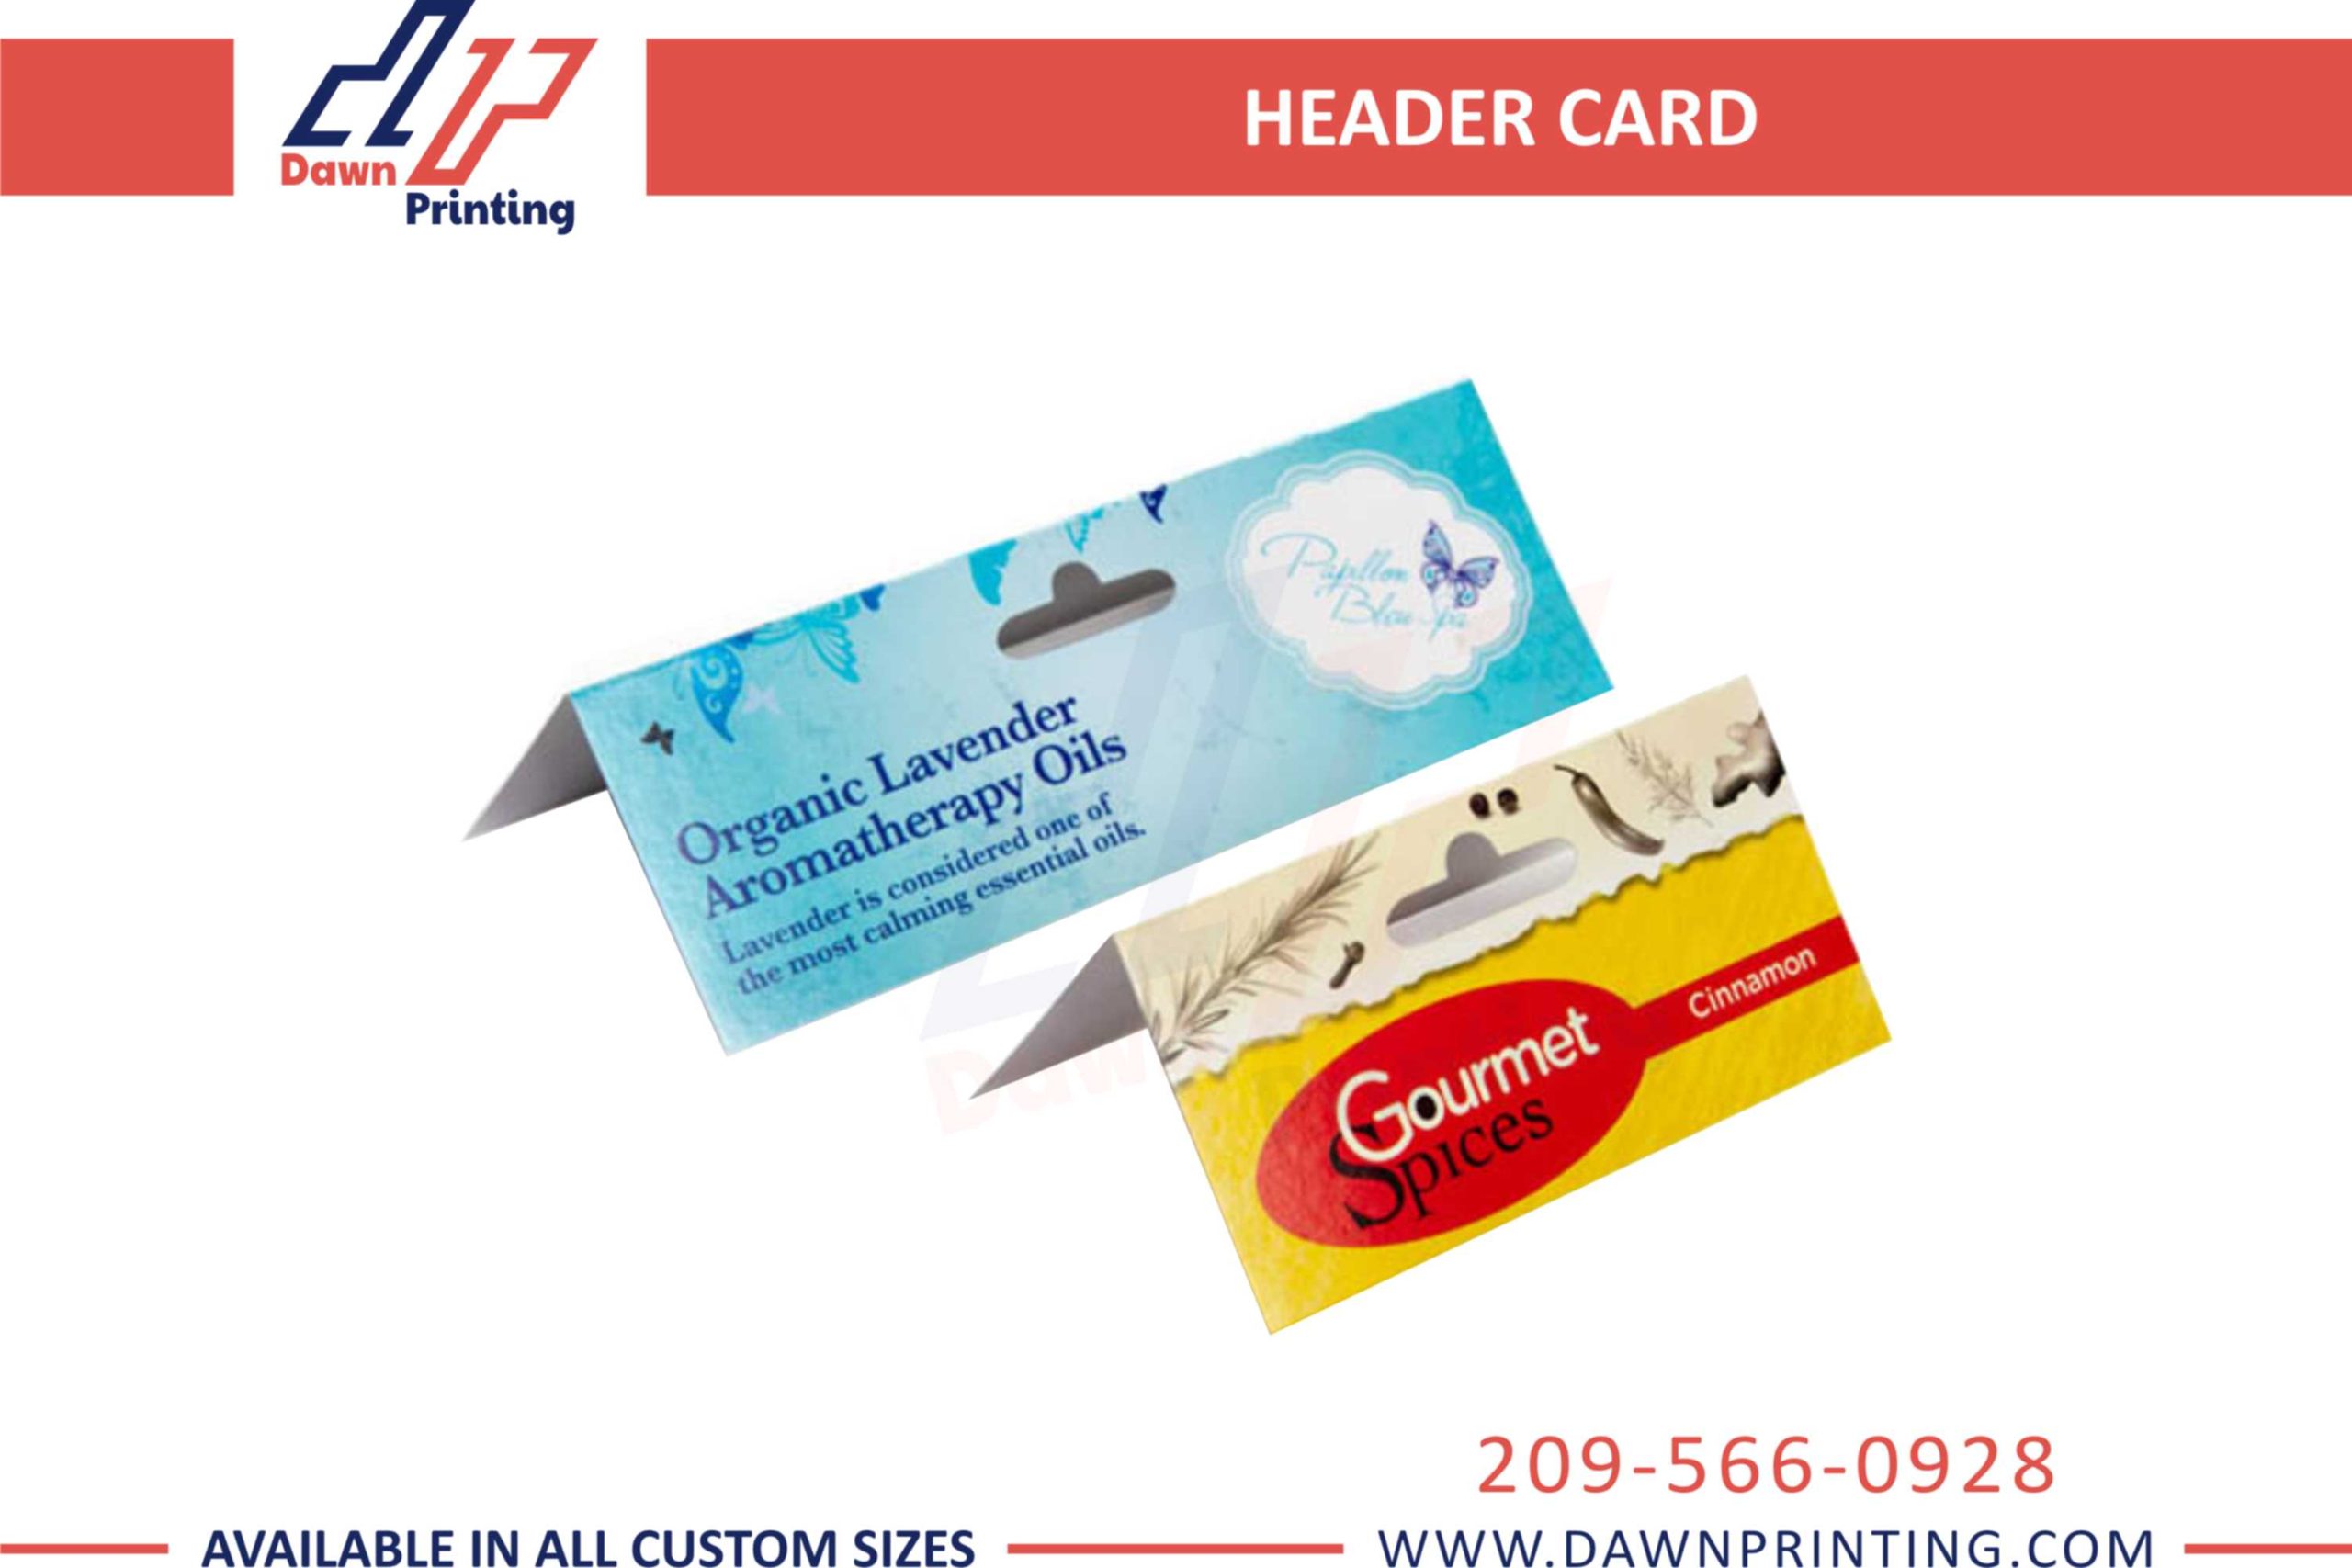 Custom Made Header Cards - Dawn Printing